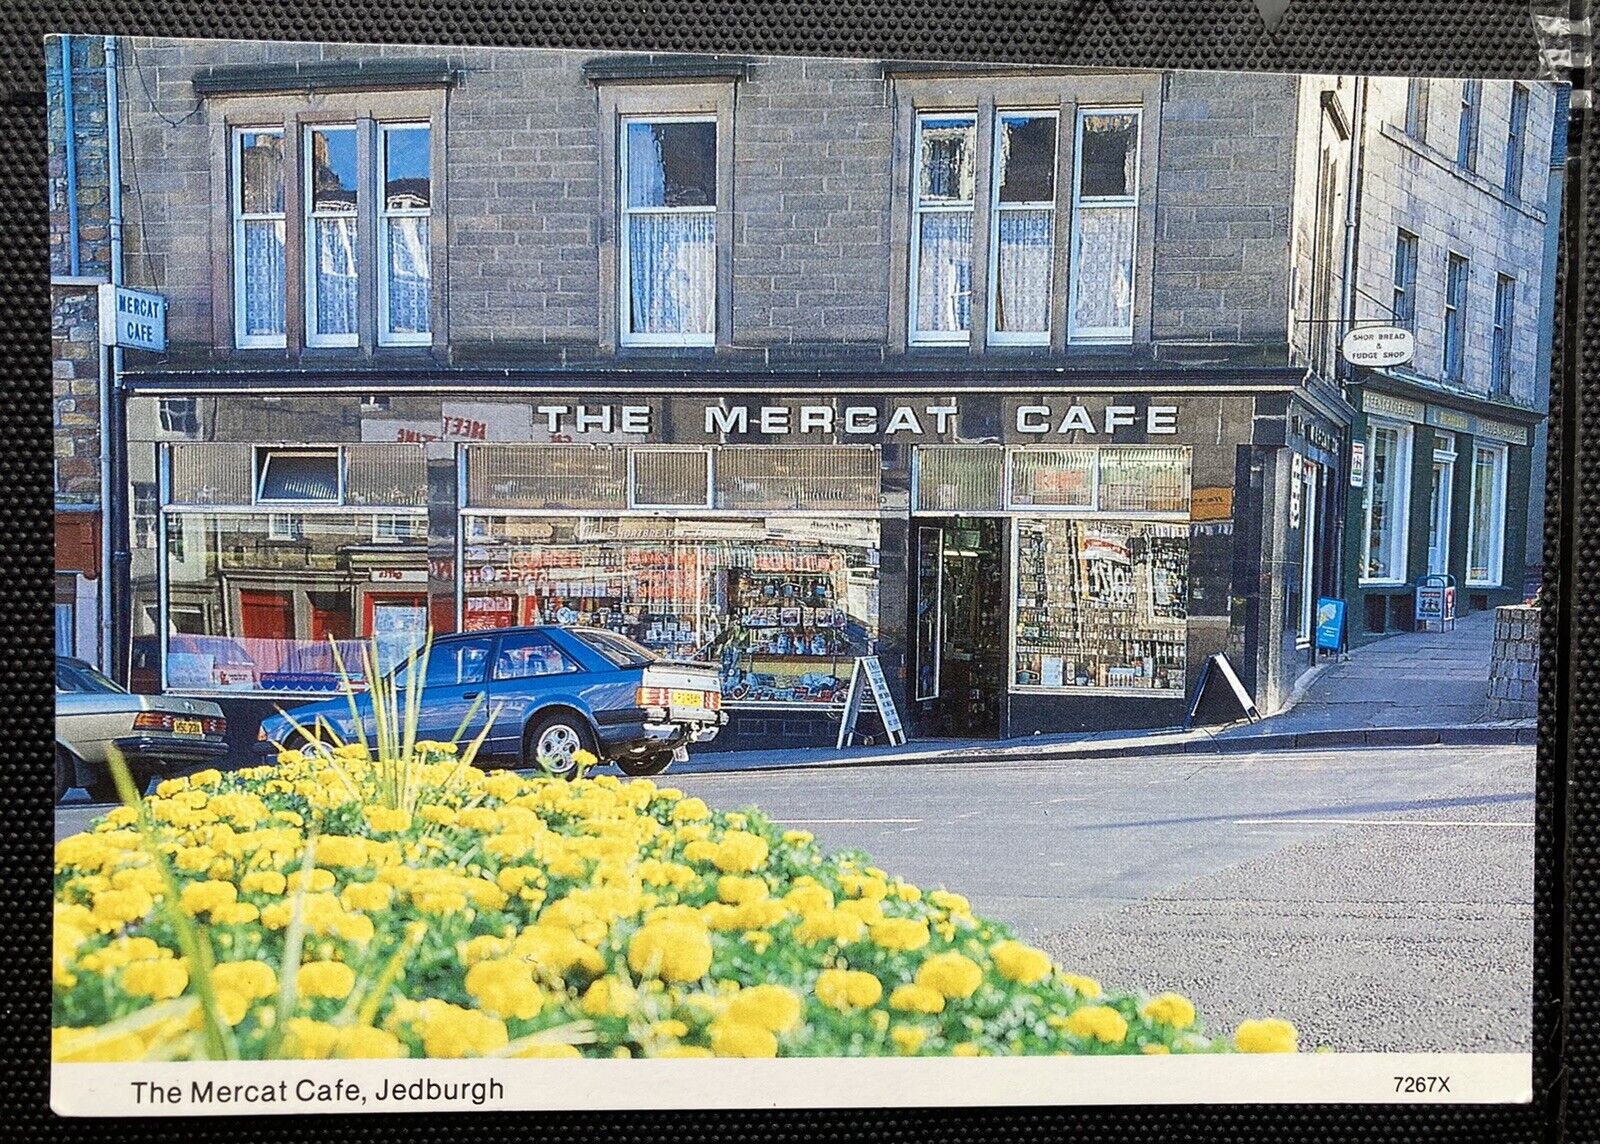 House Clearance - Jedburgh - Borders - Canongate - Mercat Cafe - A Printed Service